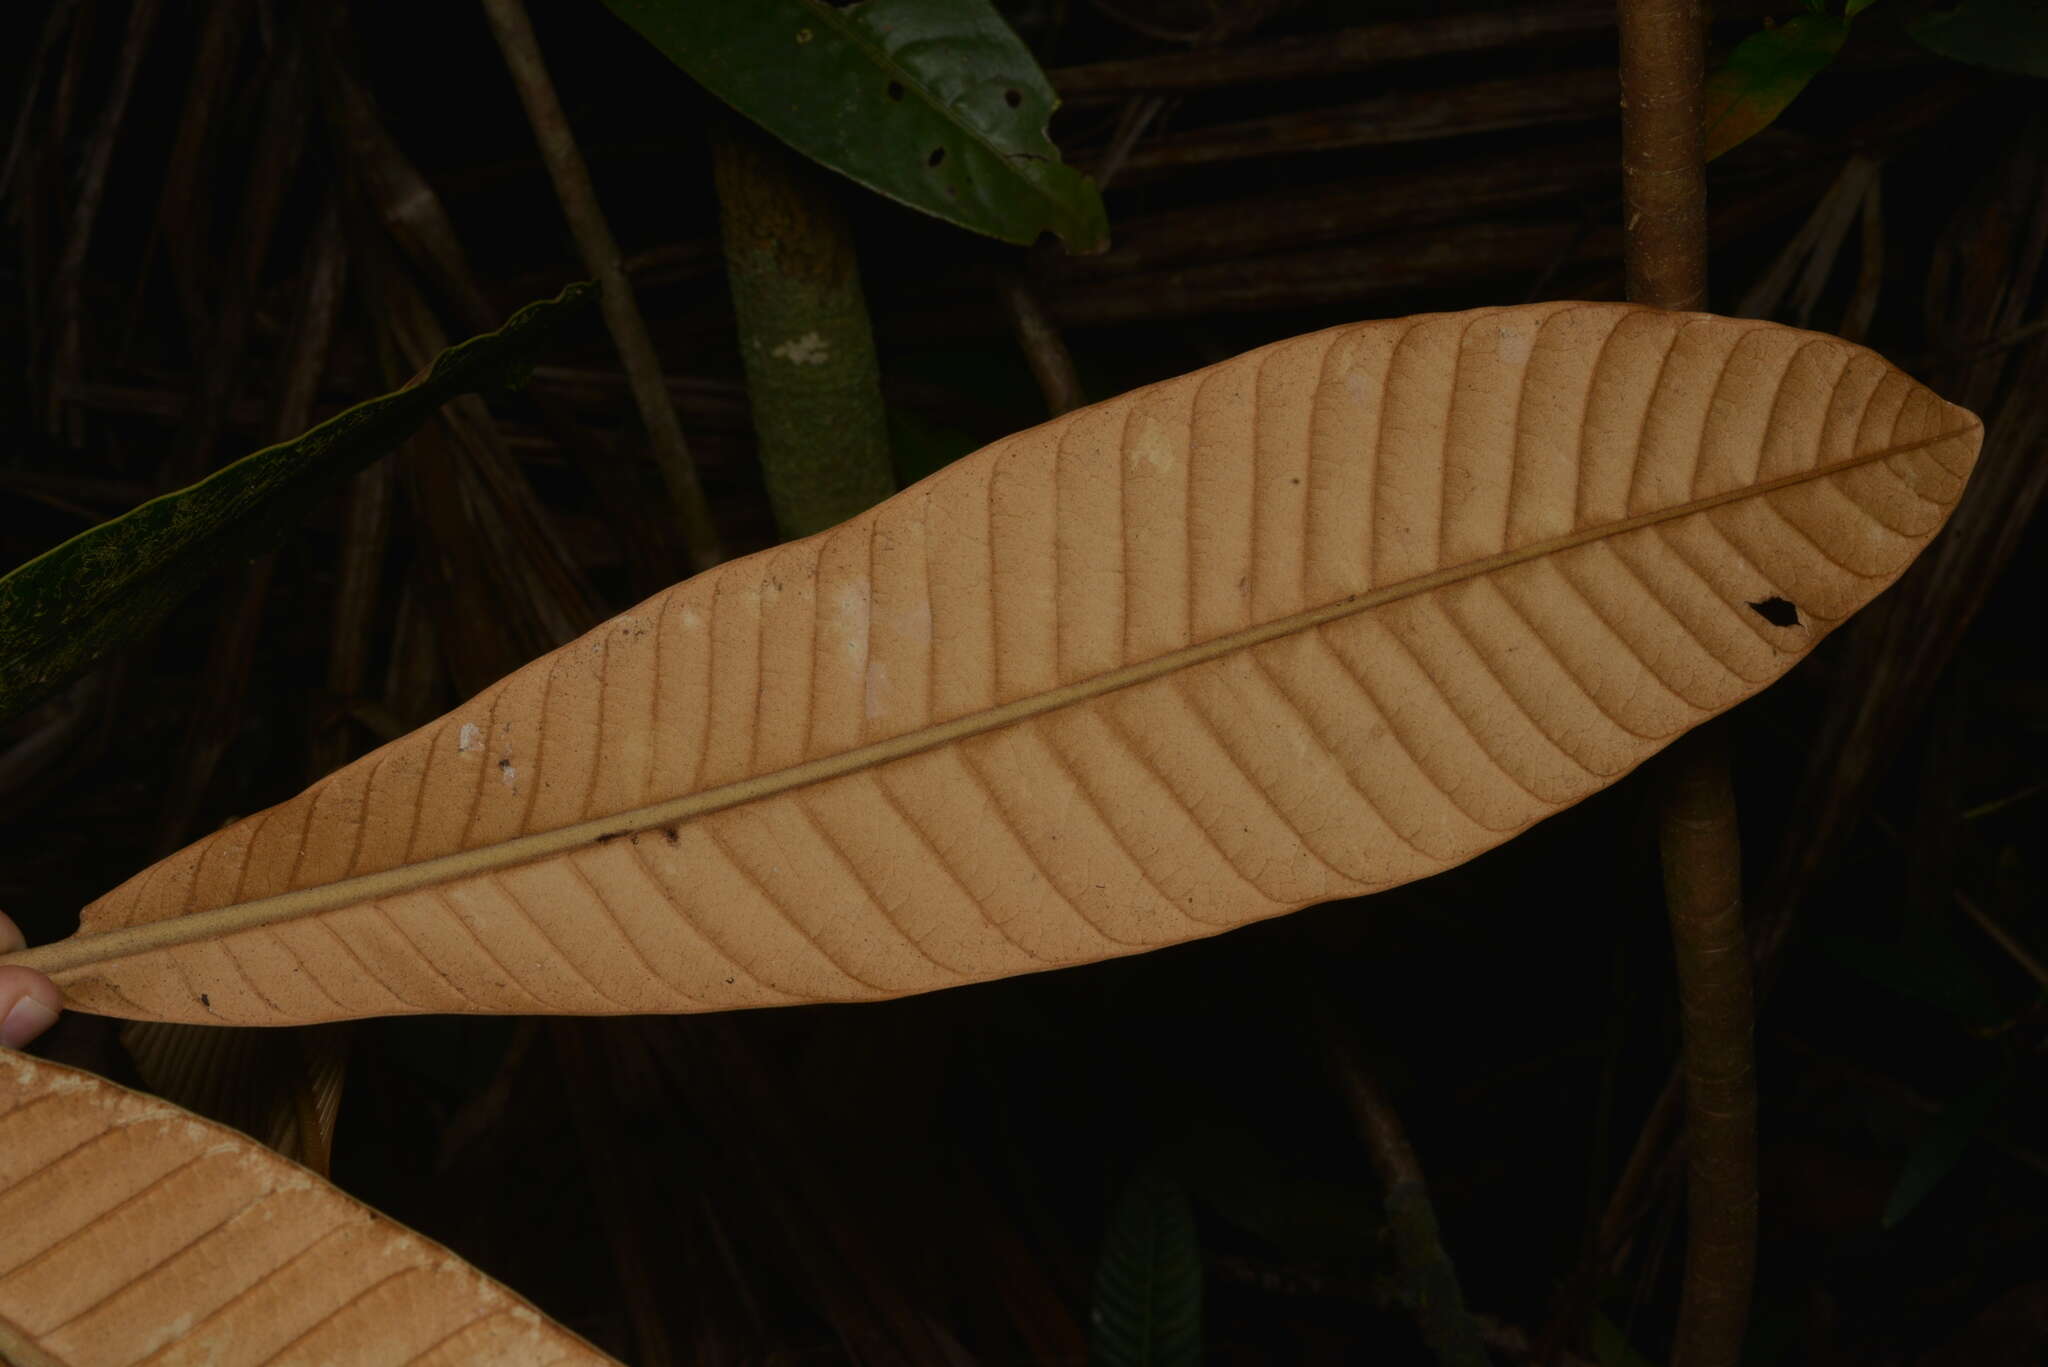 Image of Pycnandra fastuosa (Baill.) Vink